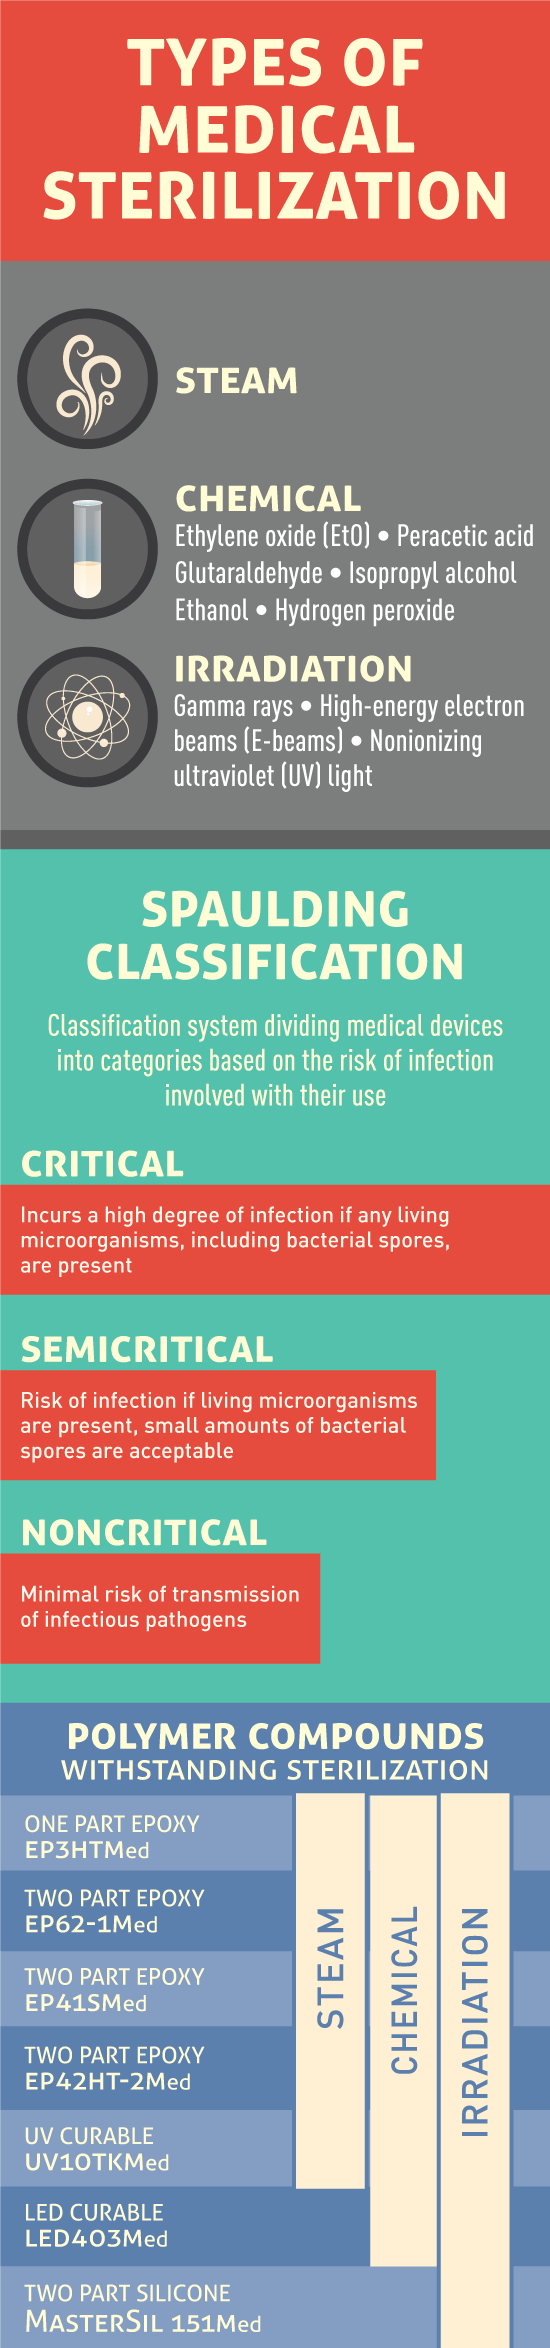 Types of Medical Sterilization